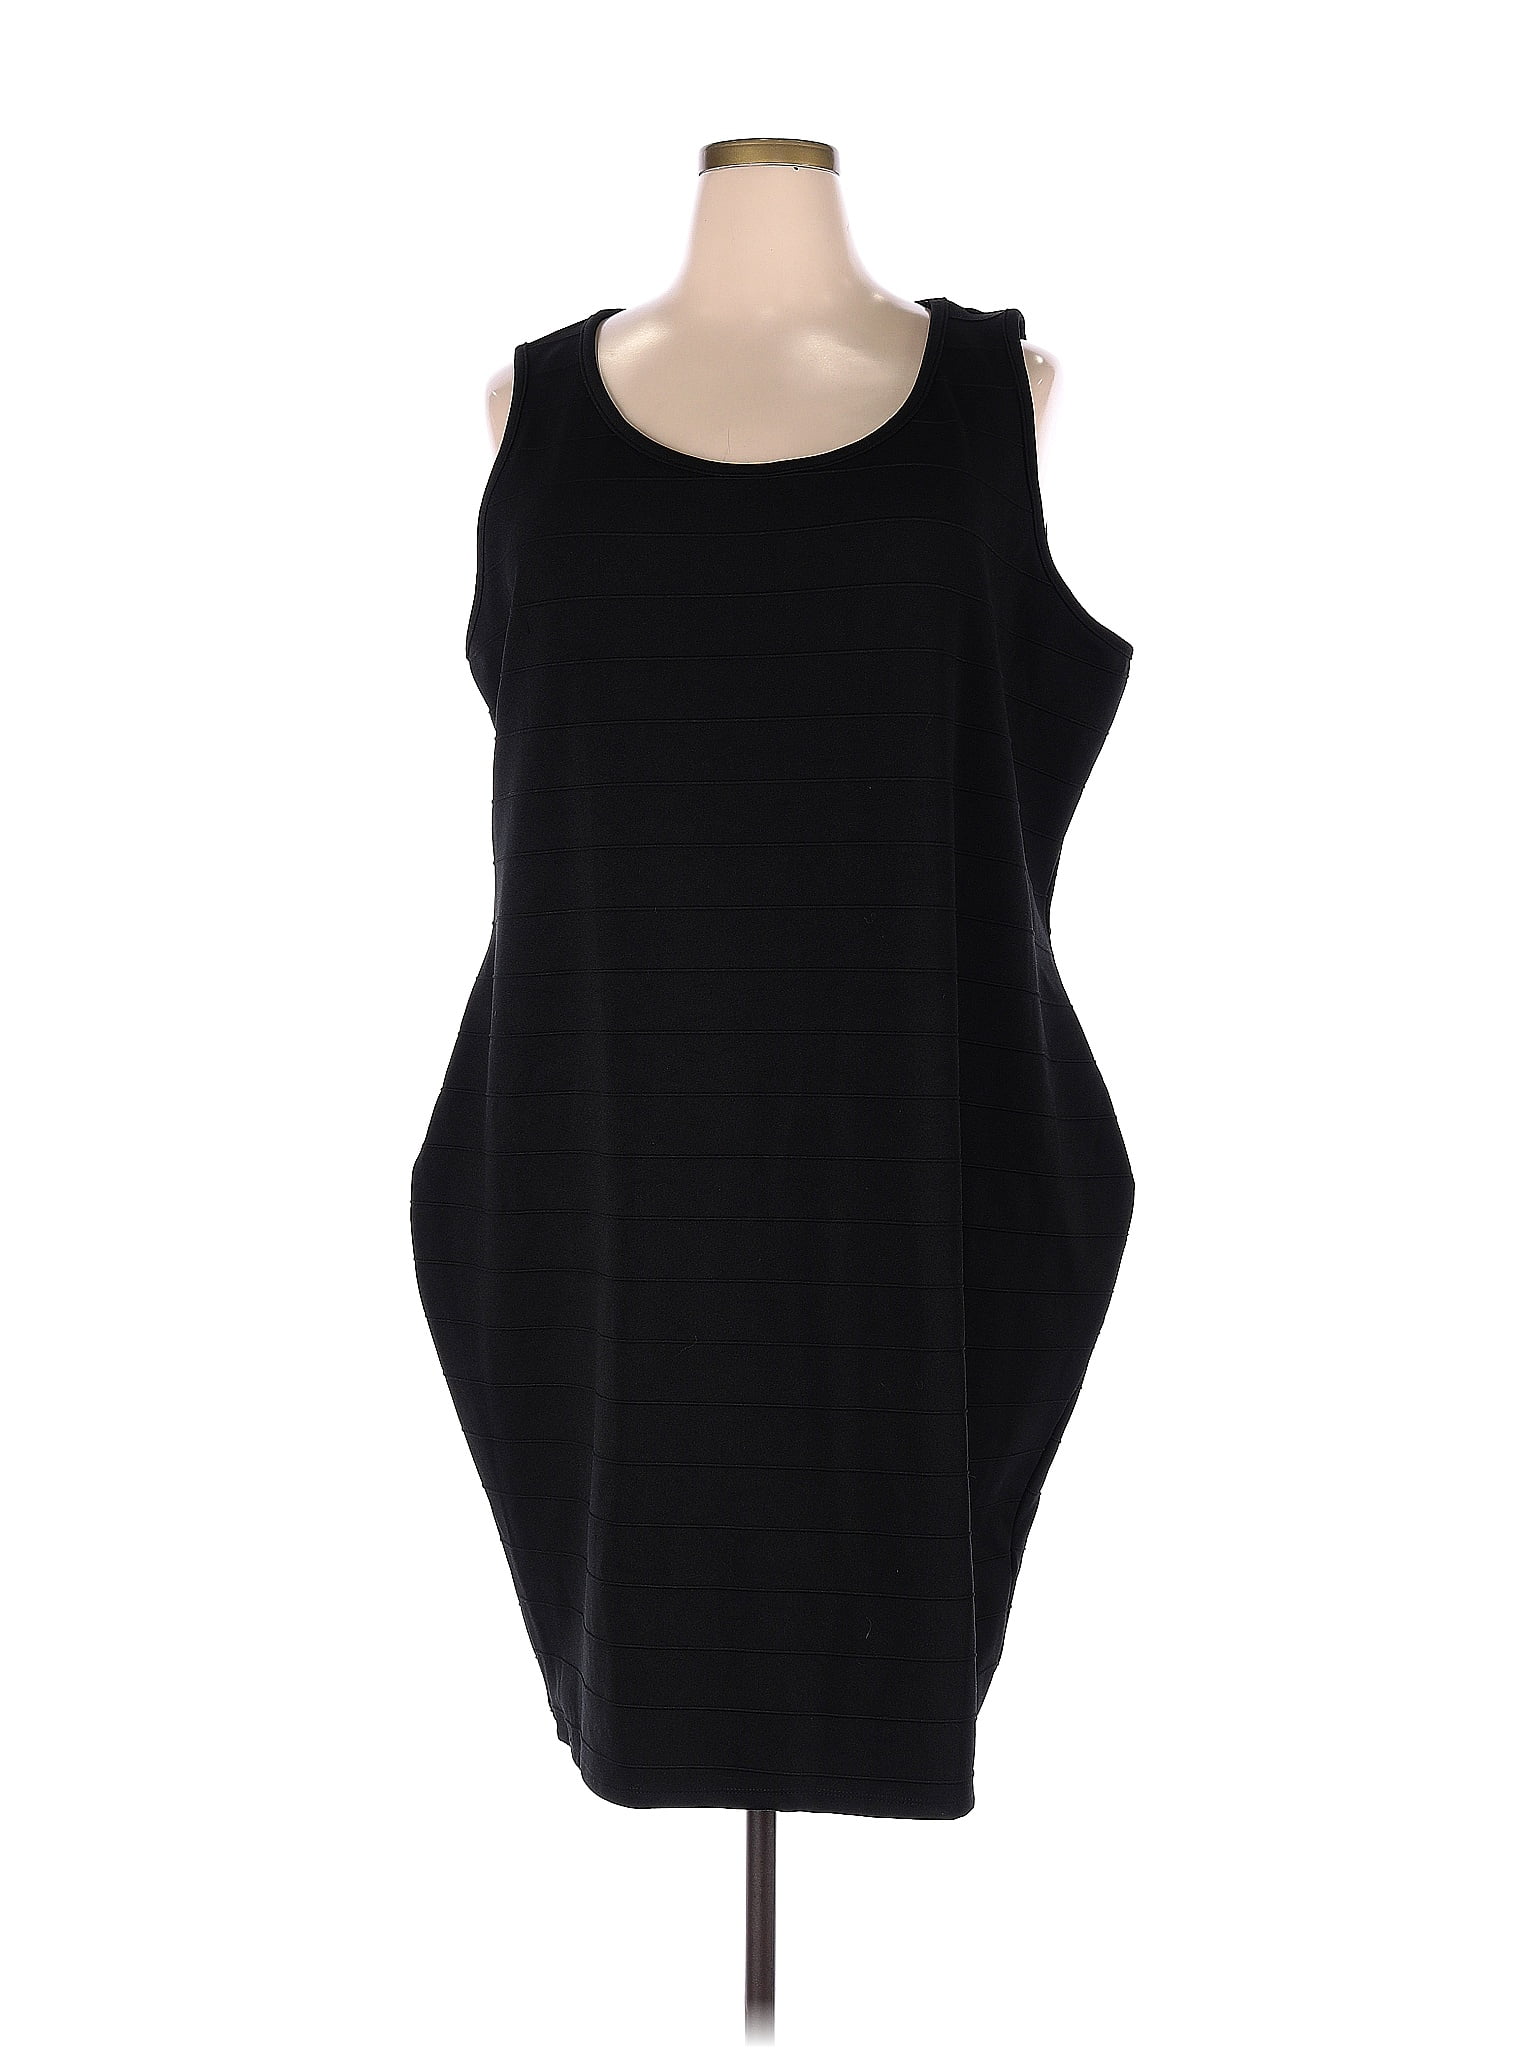 Lane Bryant Solid Black Cocktail Dress Size 28 (Plus) - 59% off | thredUP